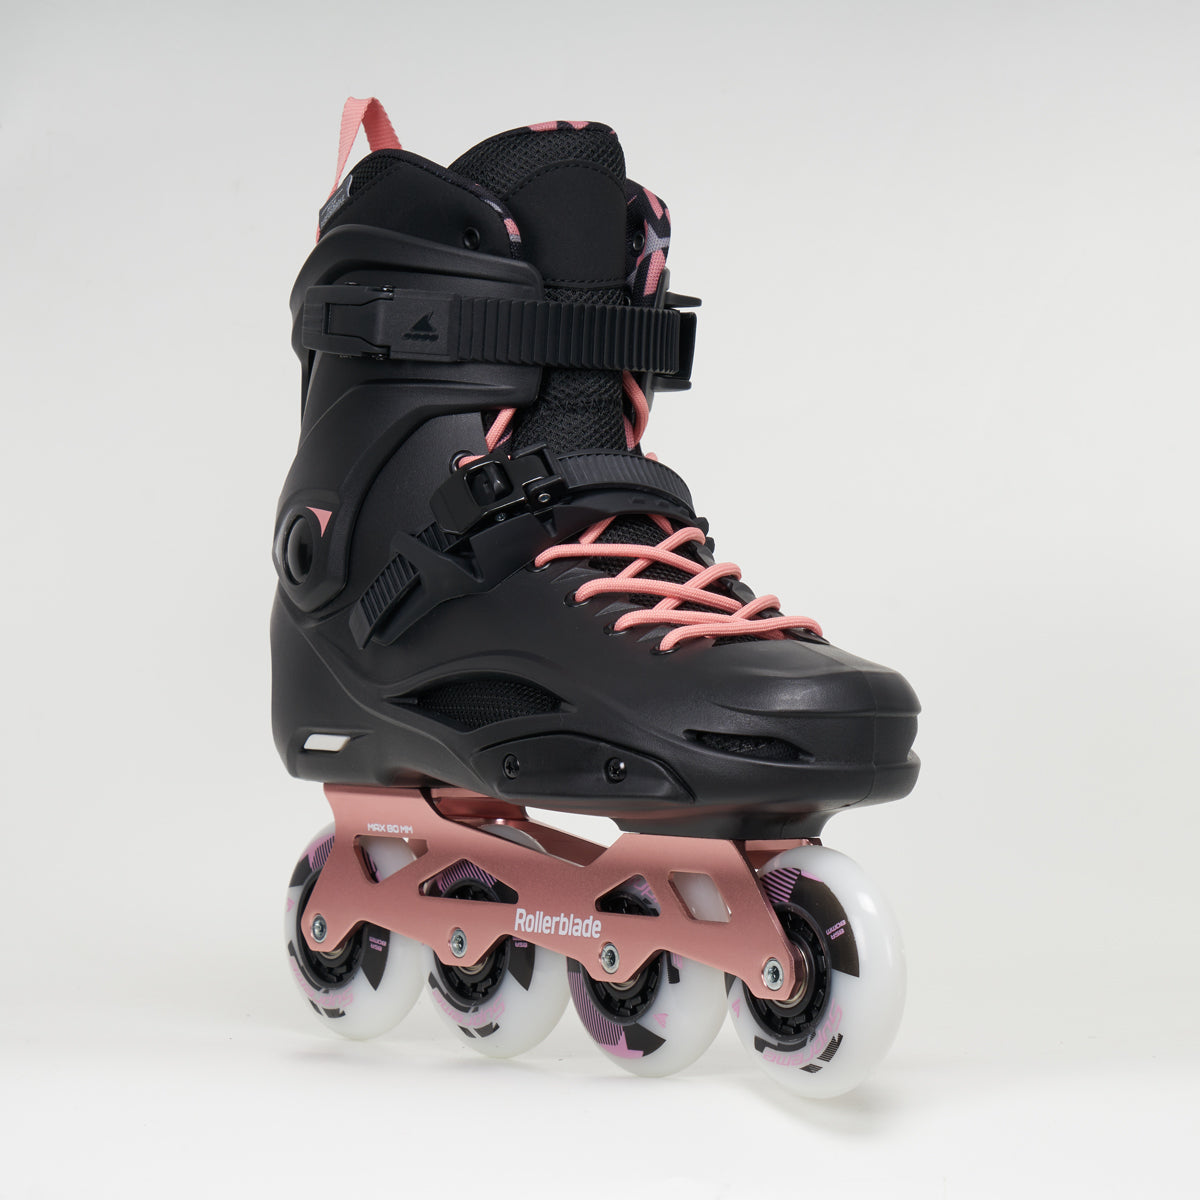 Rollerblade RB Pro X W Skates - Black / Pink